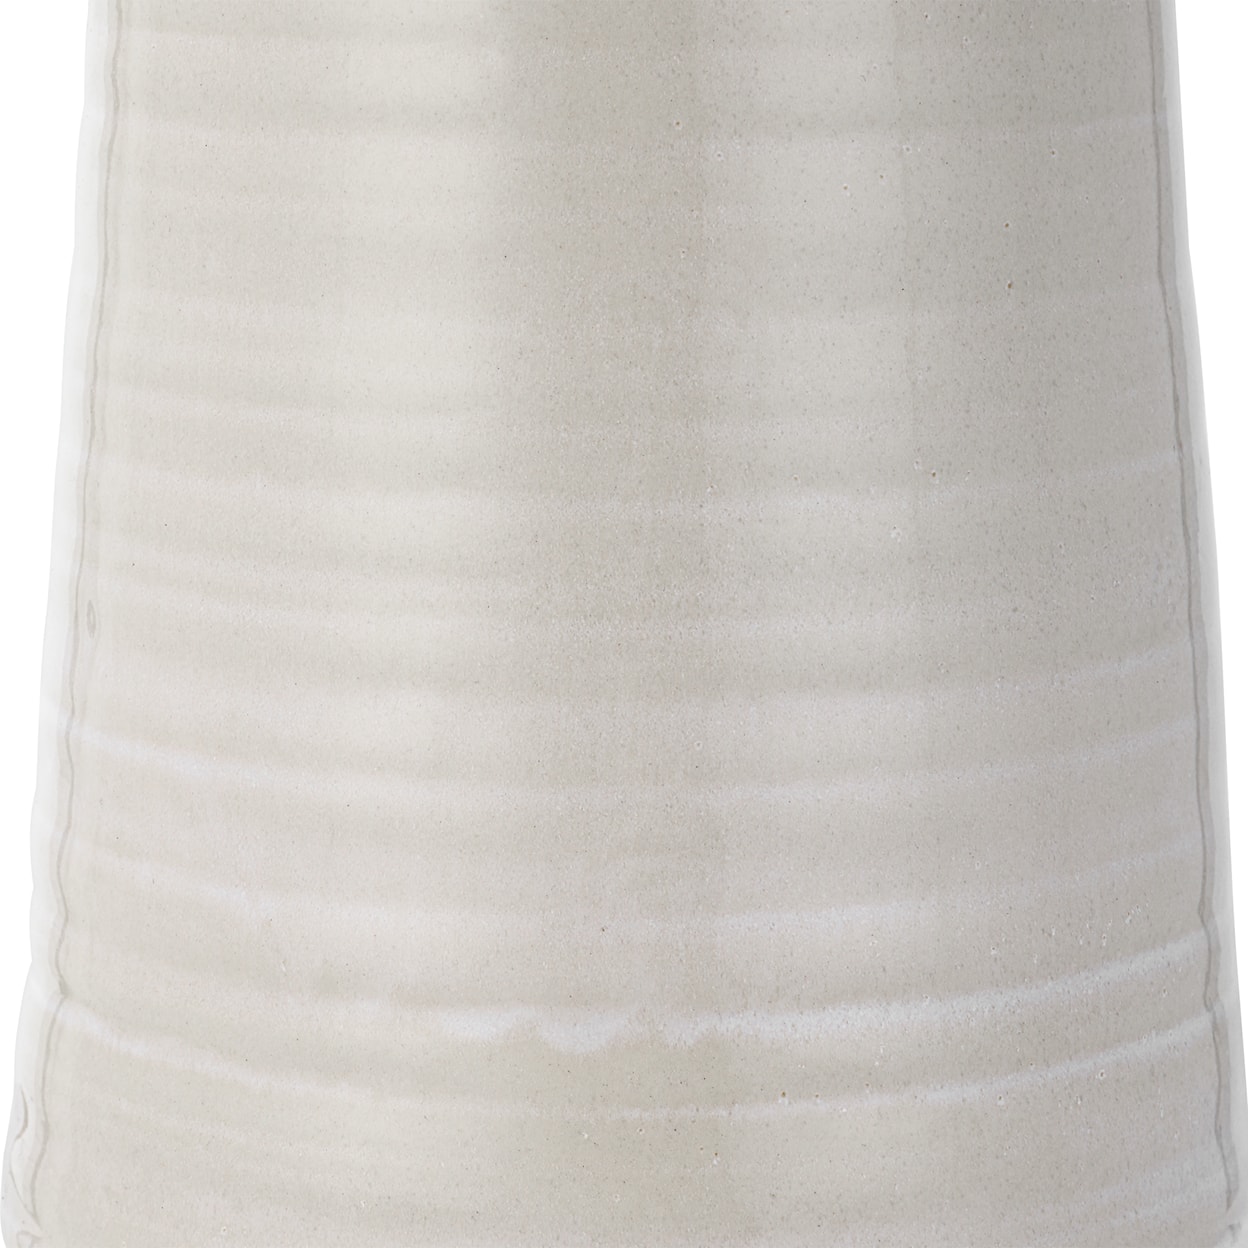 Uttermost Amphora Amphora Off-White Glaze Table Lamp